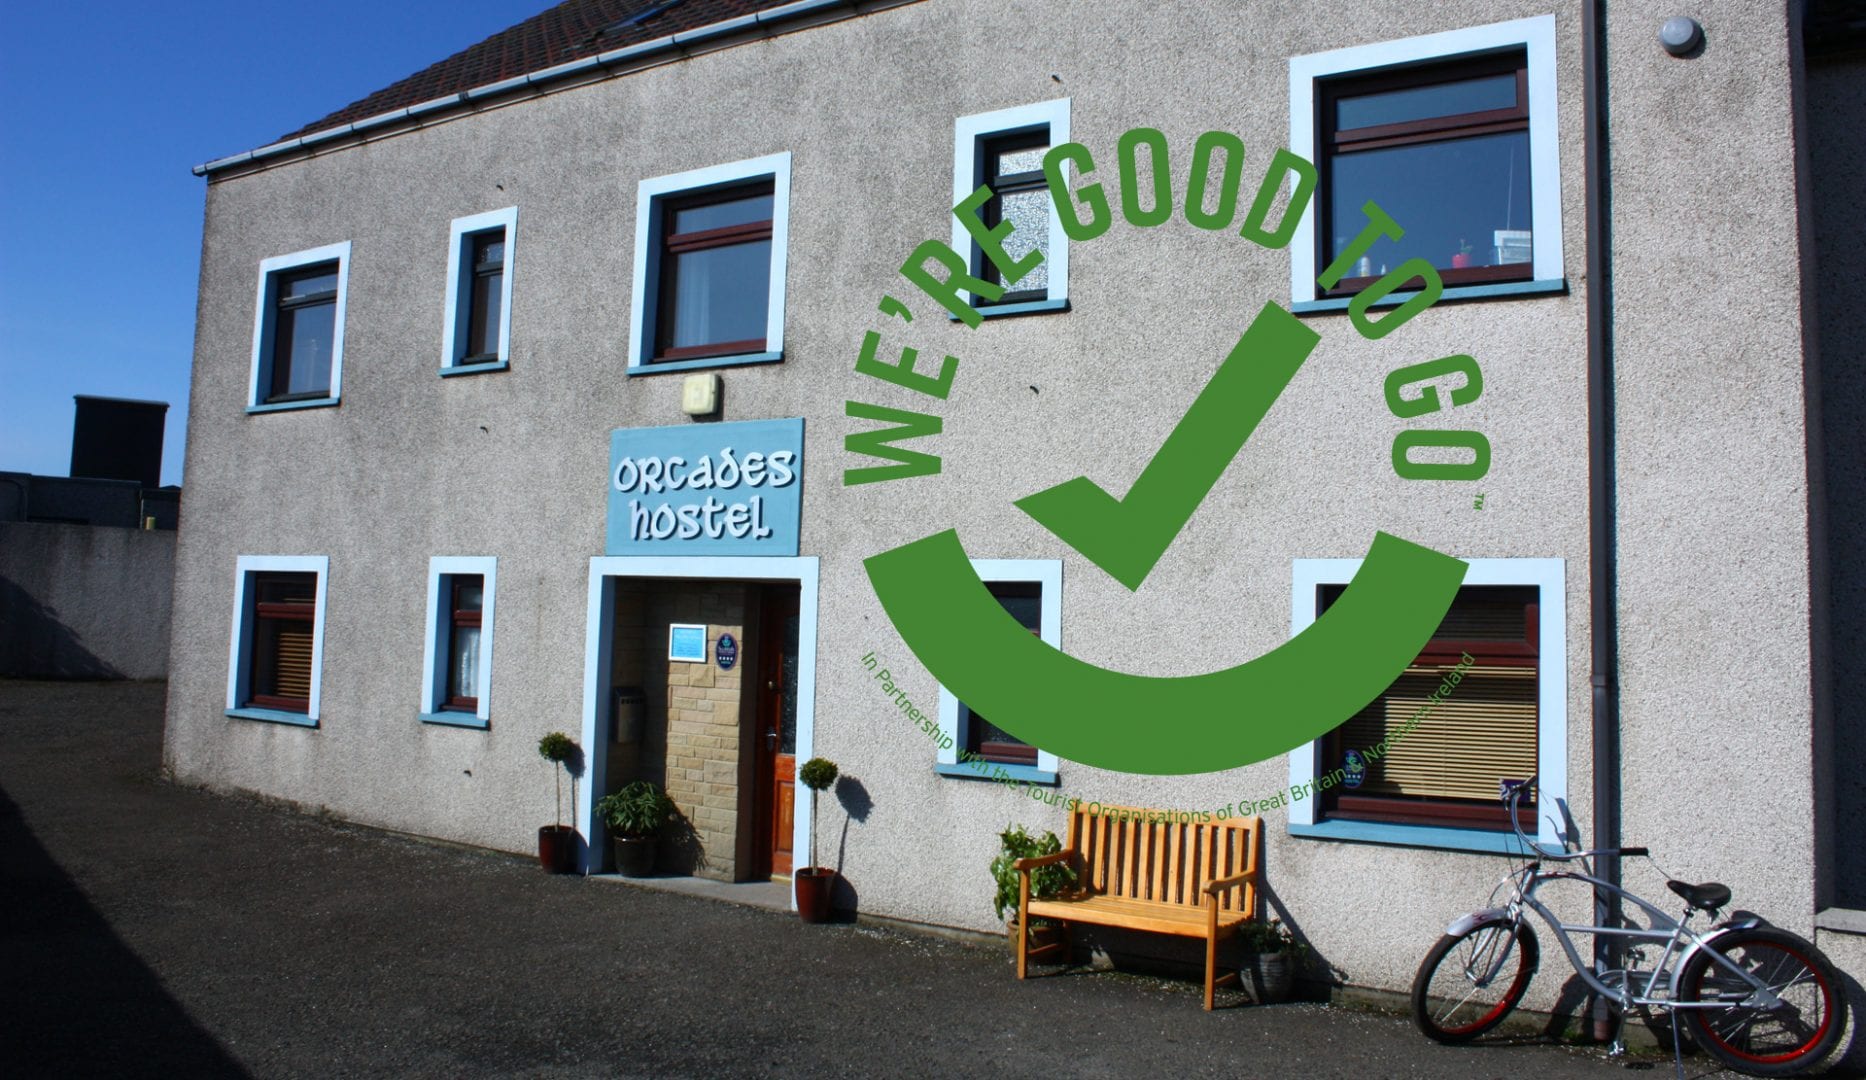 orcades hostels in kirkwall with goodtogo logo